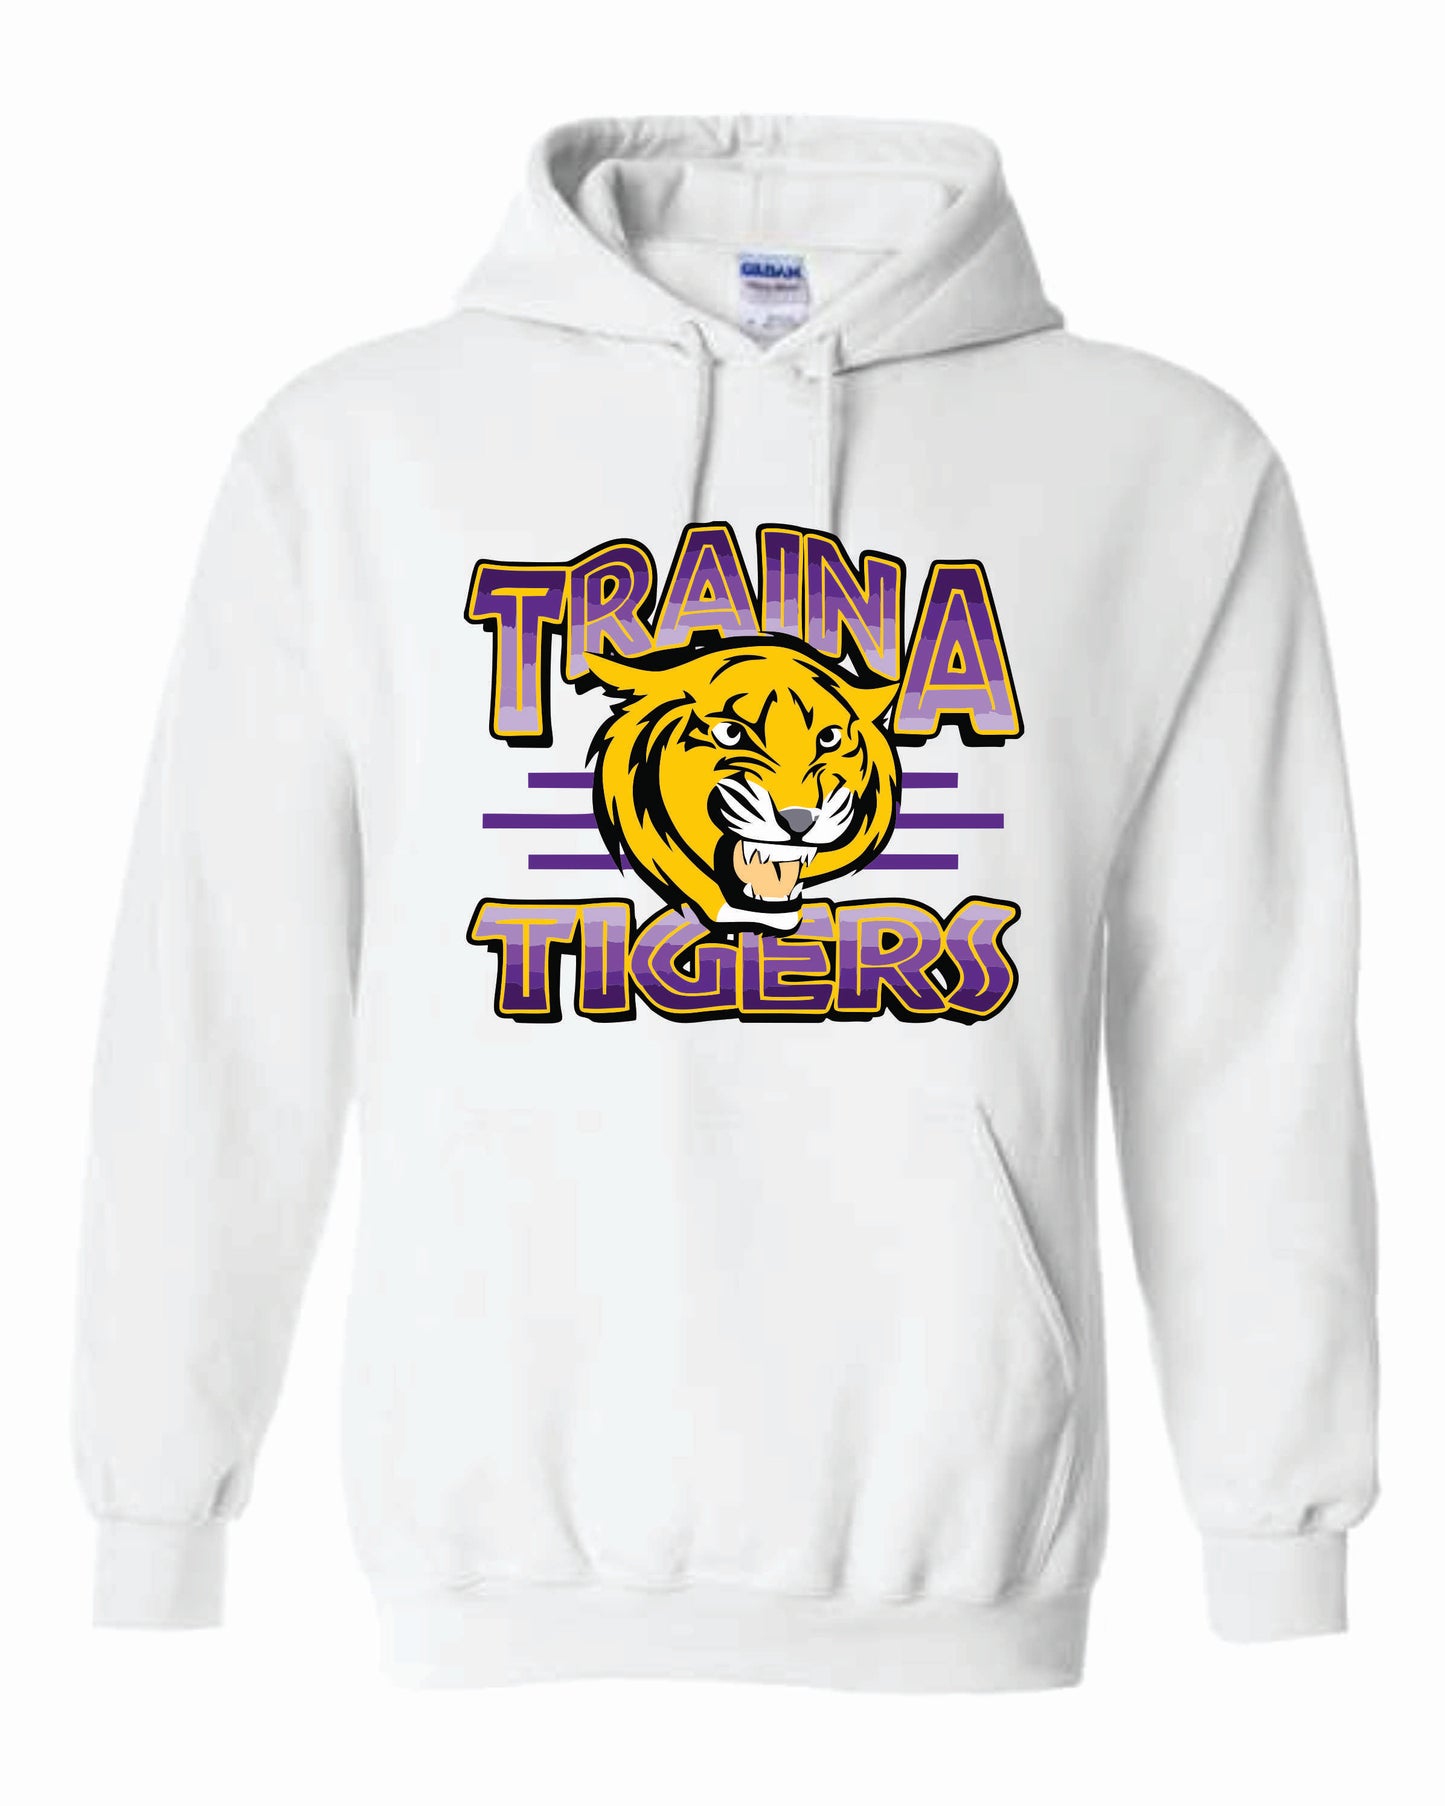 Traina Tigers hoodie